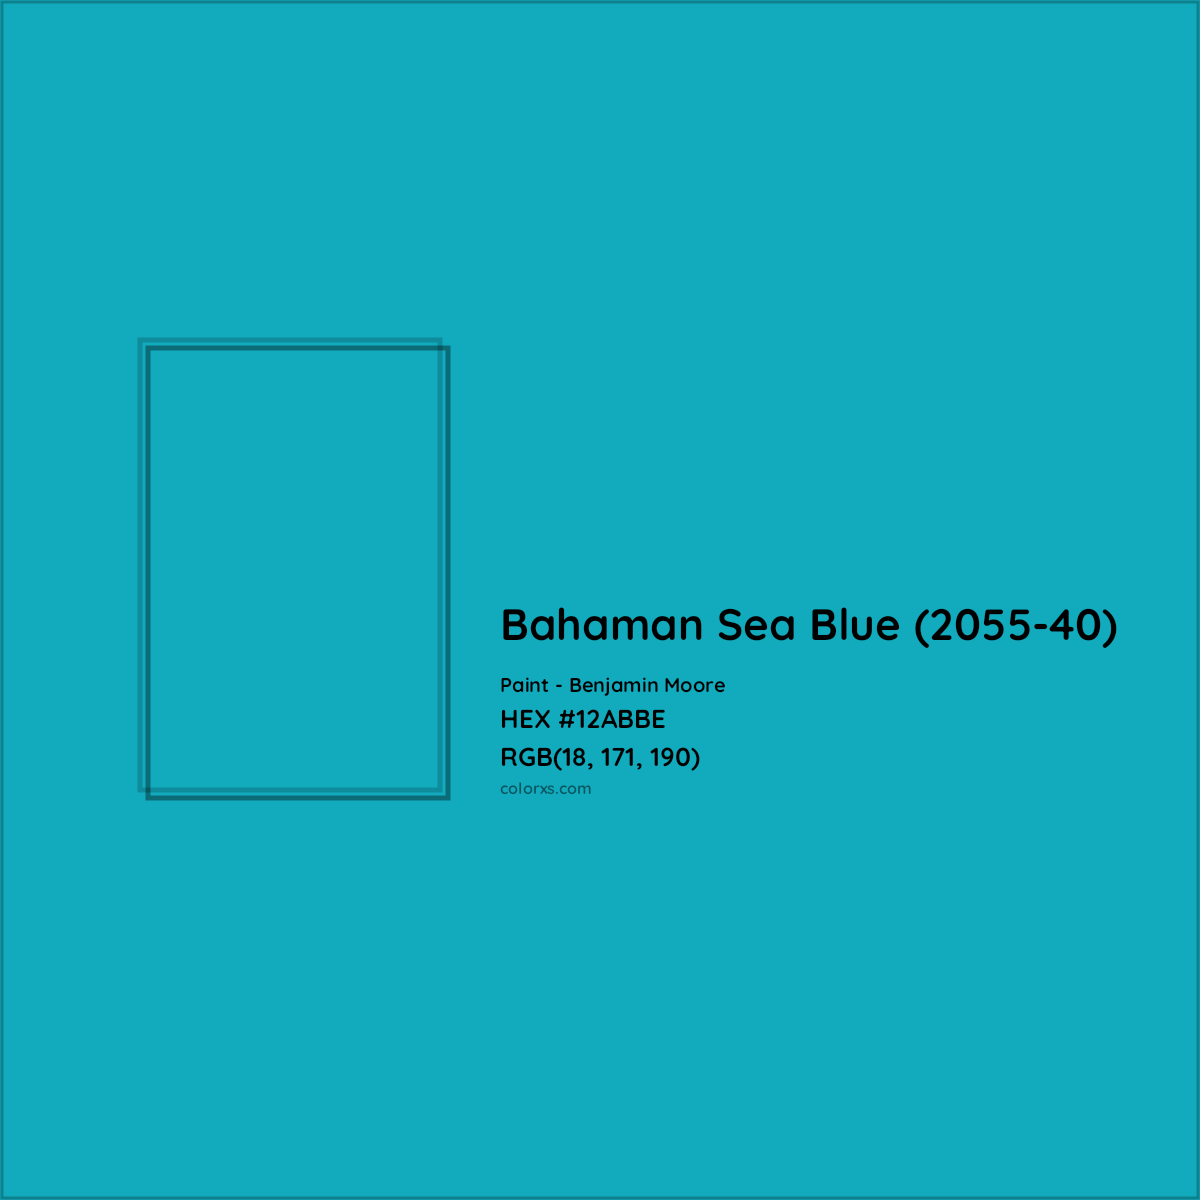 HEX #12ABBE Bahaman Sea Blue (2055-40) Paint Benjamin Moore - Color Code